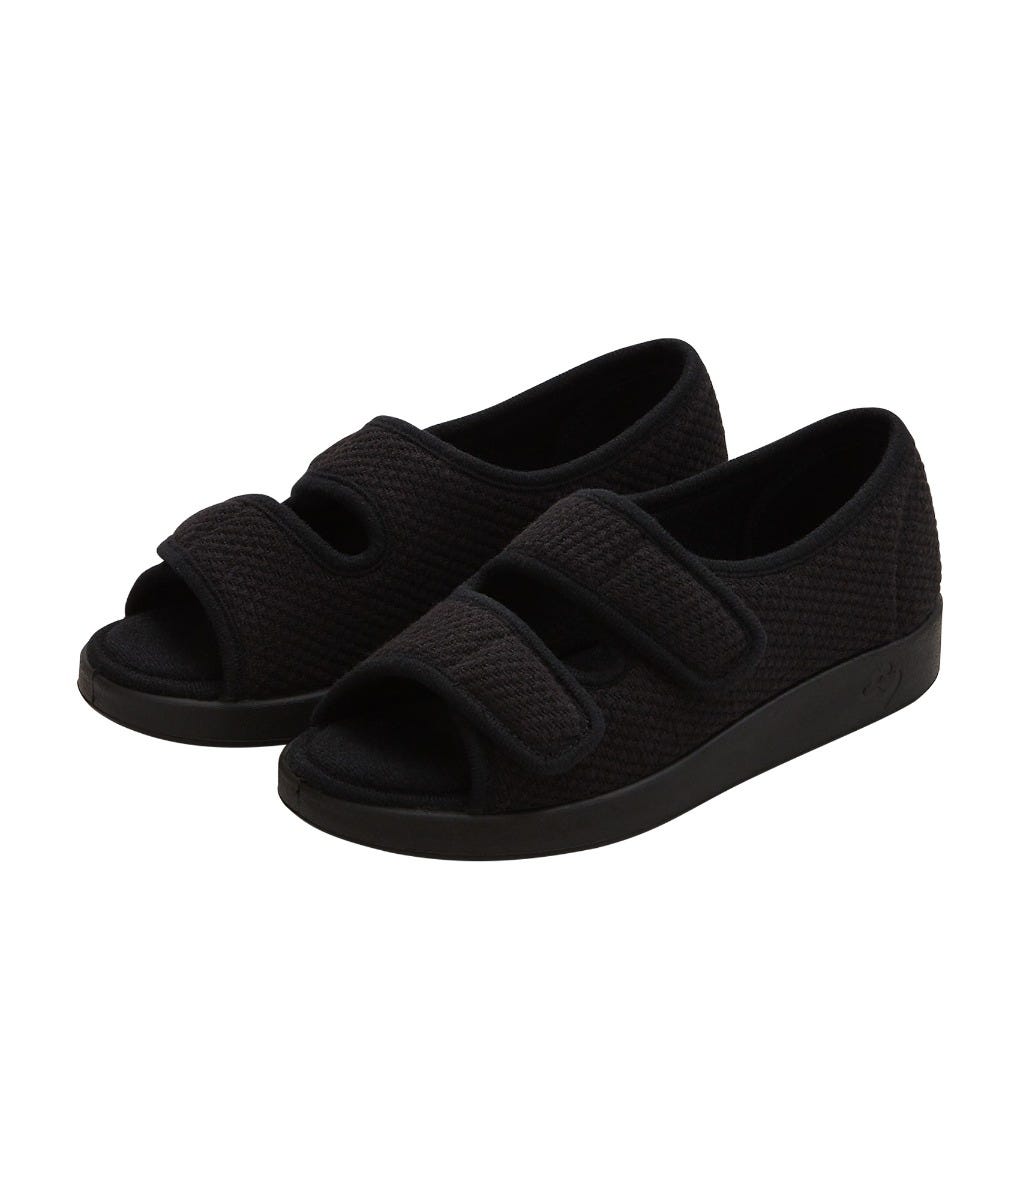 Silverts Women's Easy Closure Sandals - Black - 8